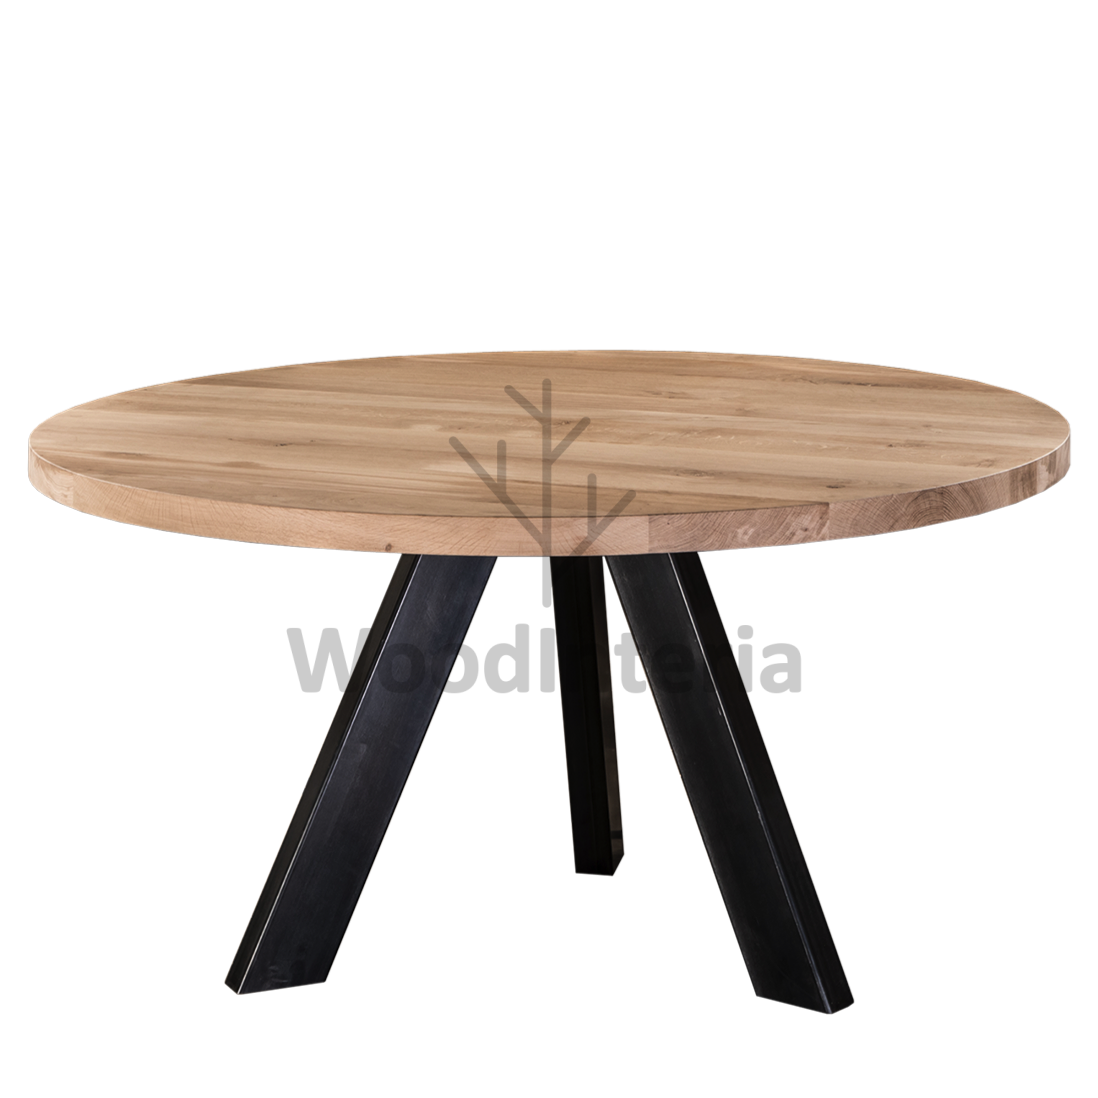 фото обеденный стол double top tri round dinning в стиле лофт эко | WoodInteria